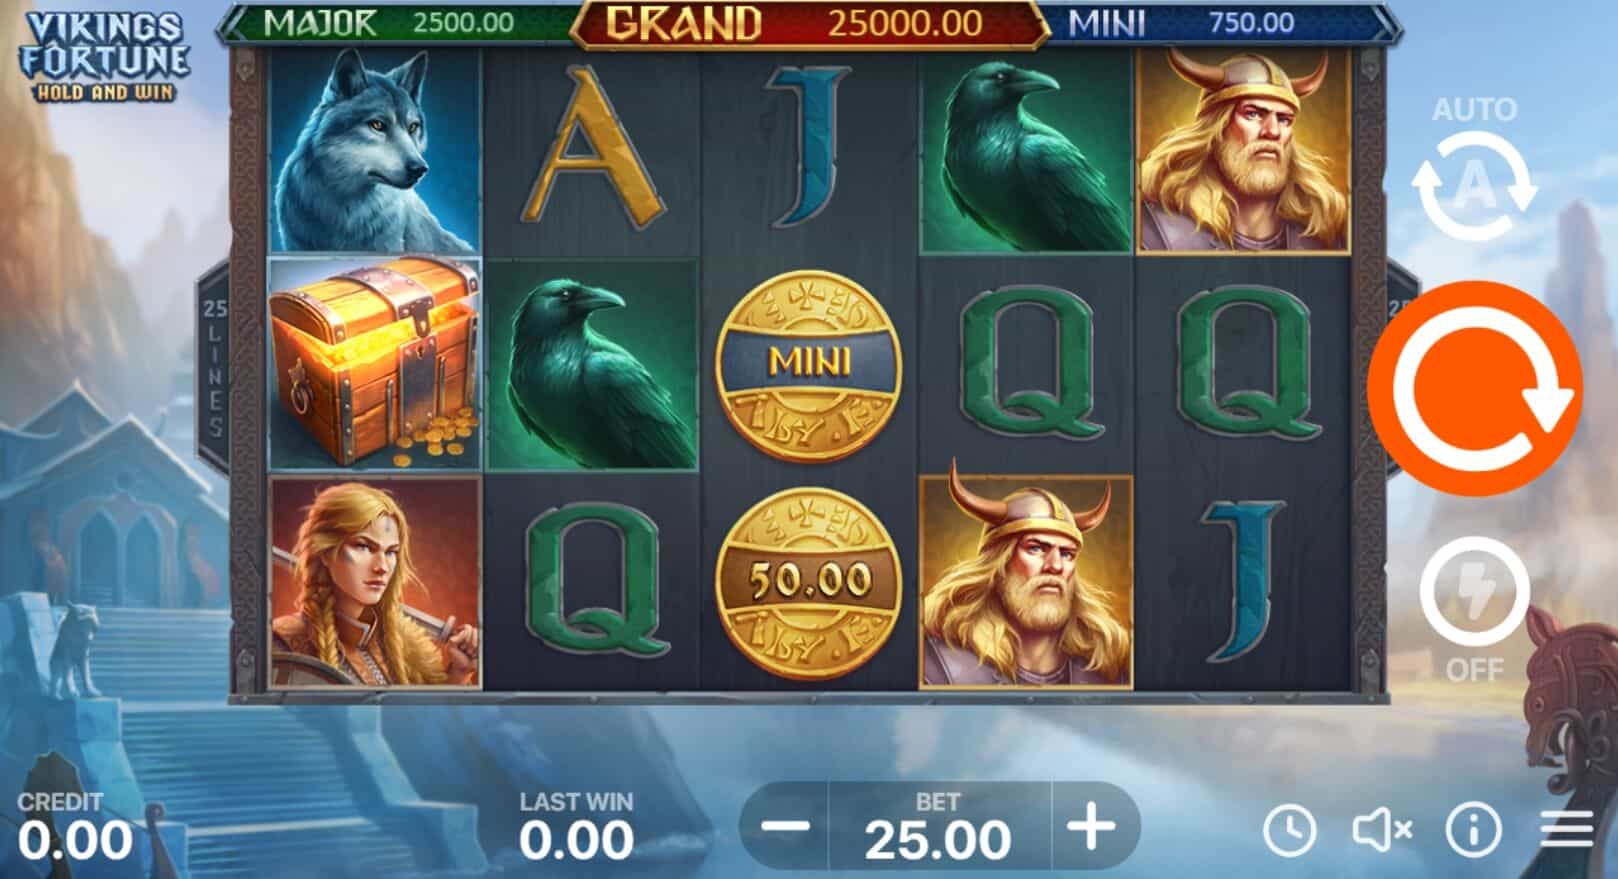 Vikings Fortune Hold And Win ค่าย booongo เว็บ สล็อต เว็บตรง SLOTXO จาก slotxo ฟรี เครดิต 50